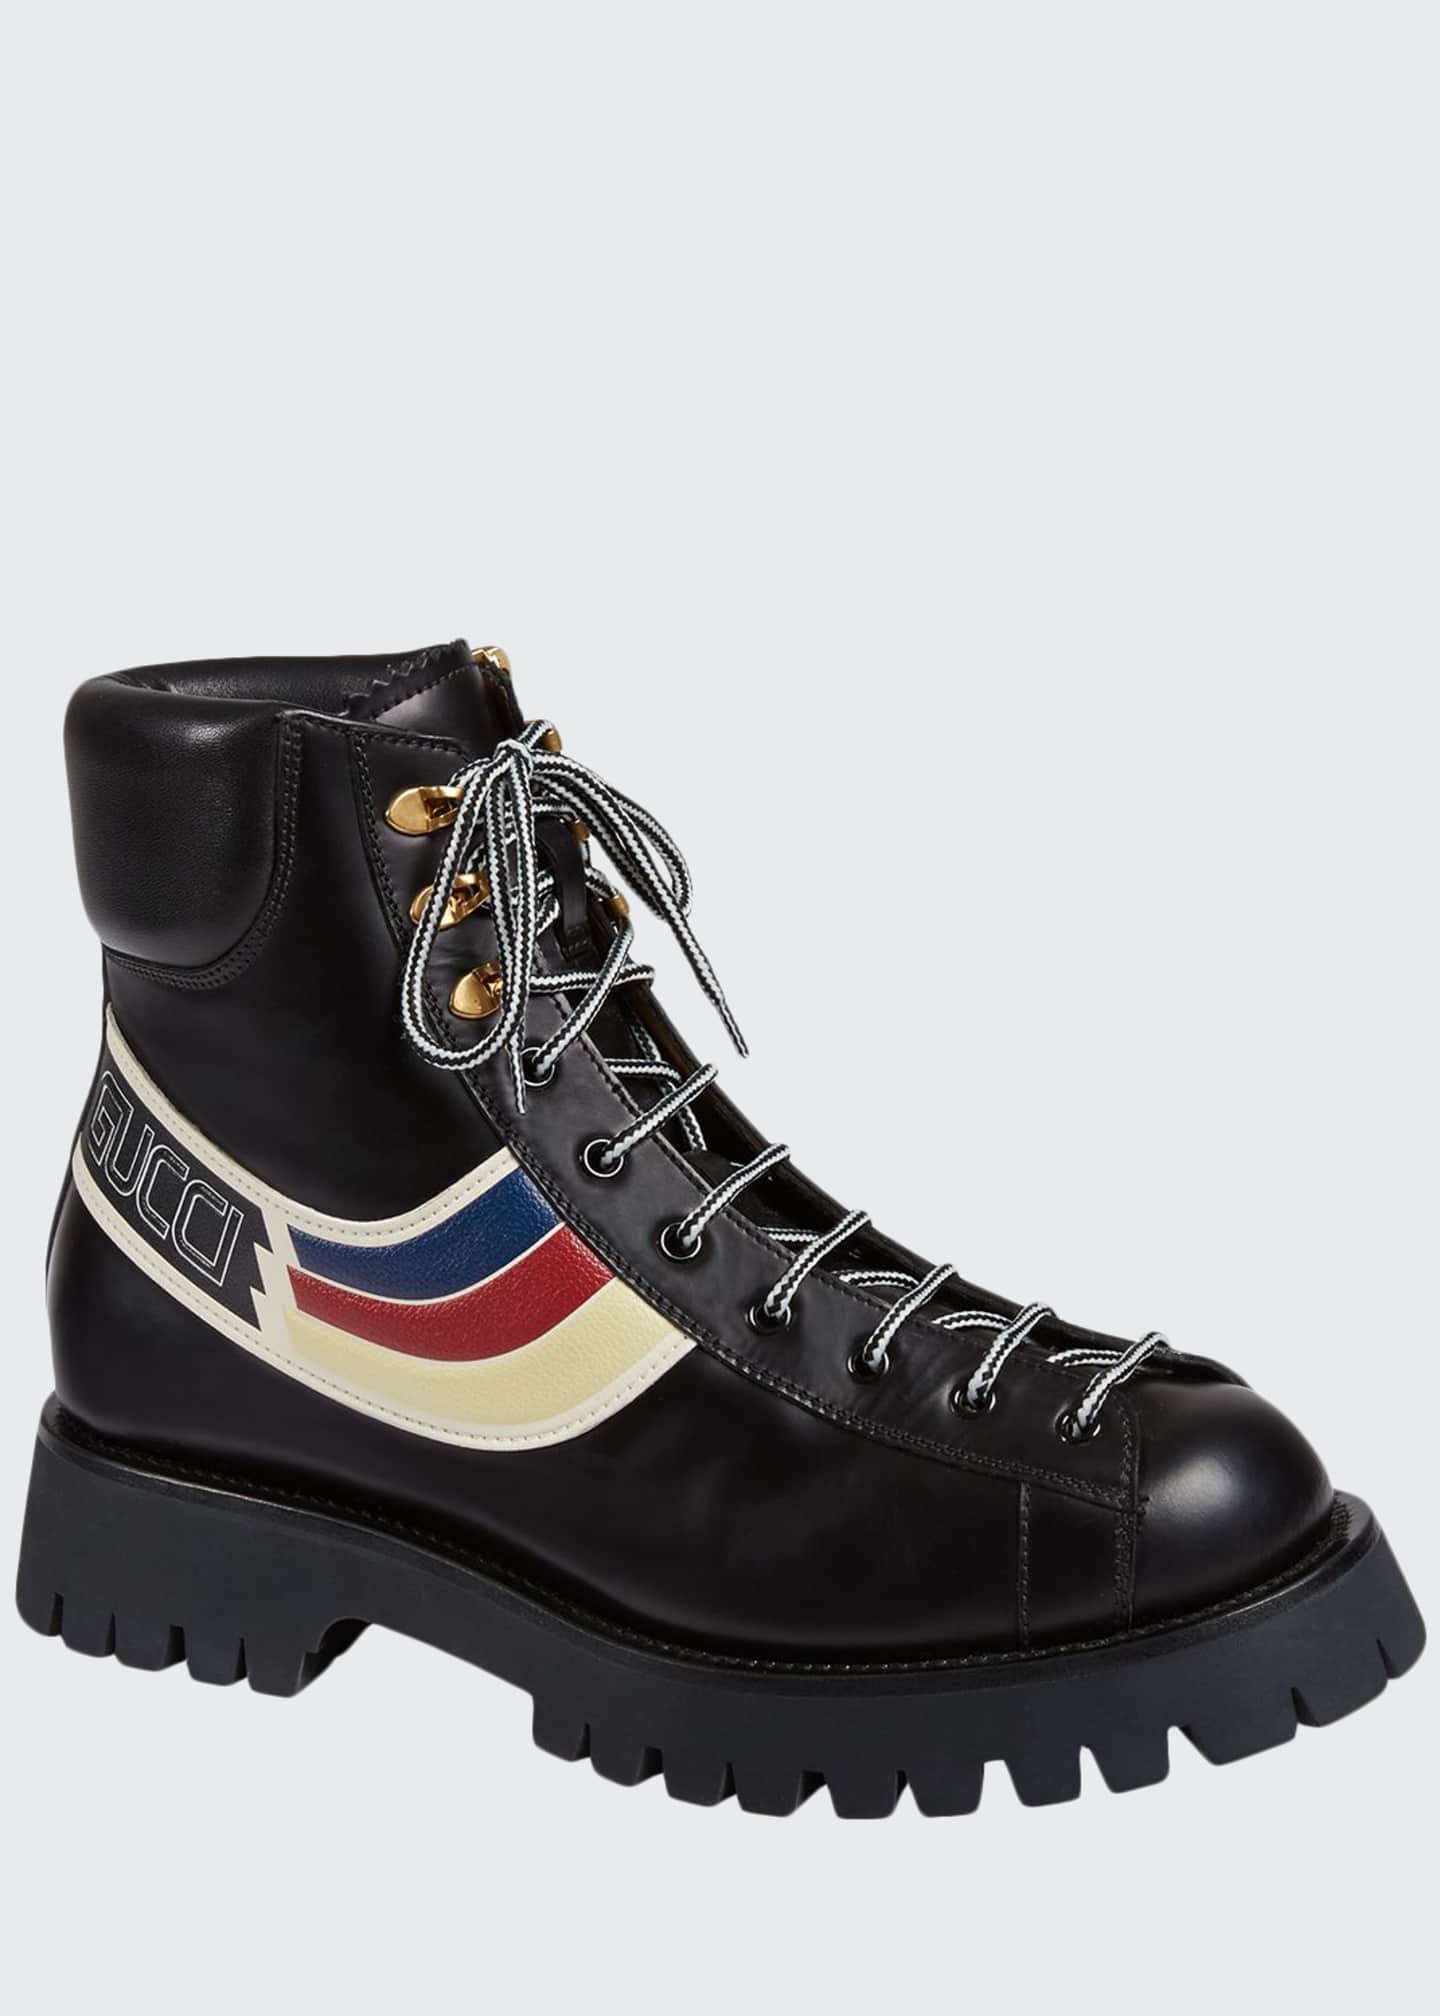 Saint Laurent Wyatt Men's Leather Ankle Boot, Black